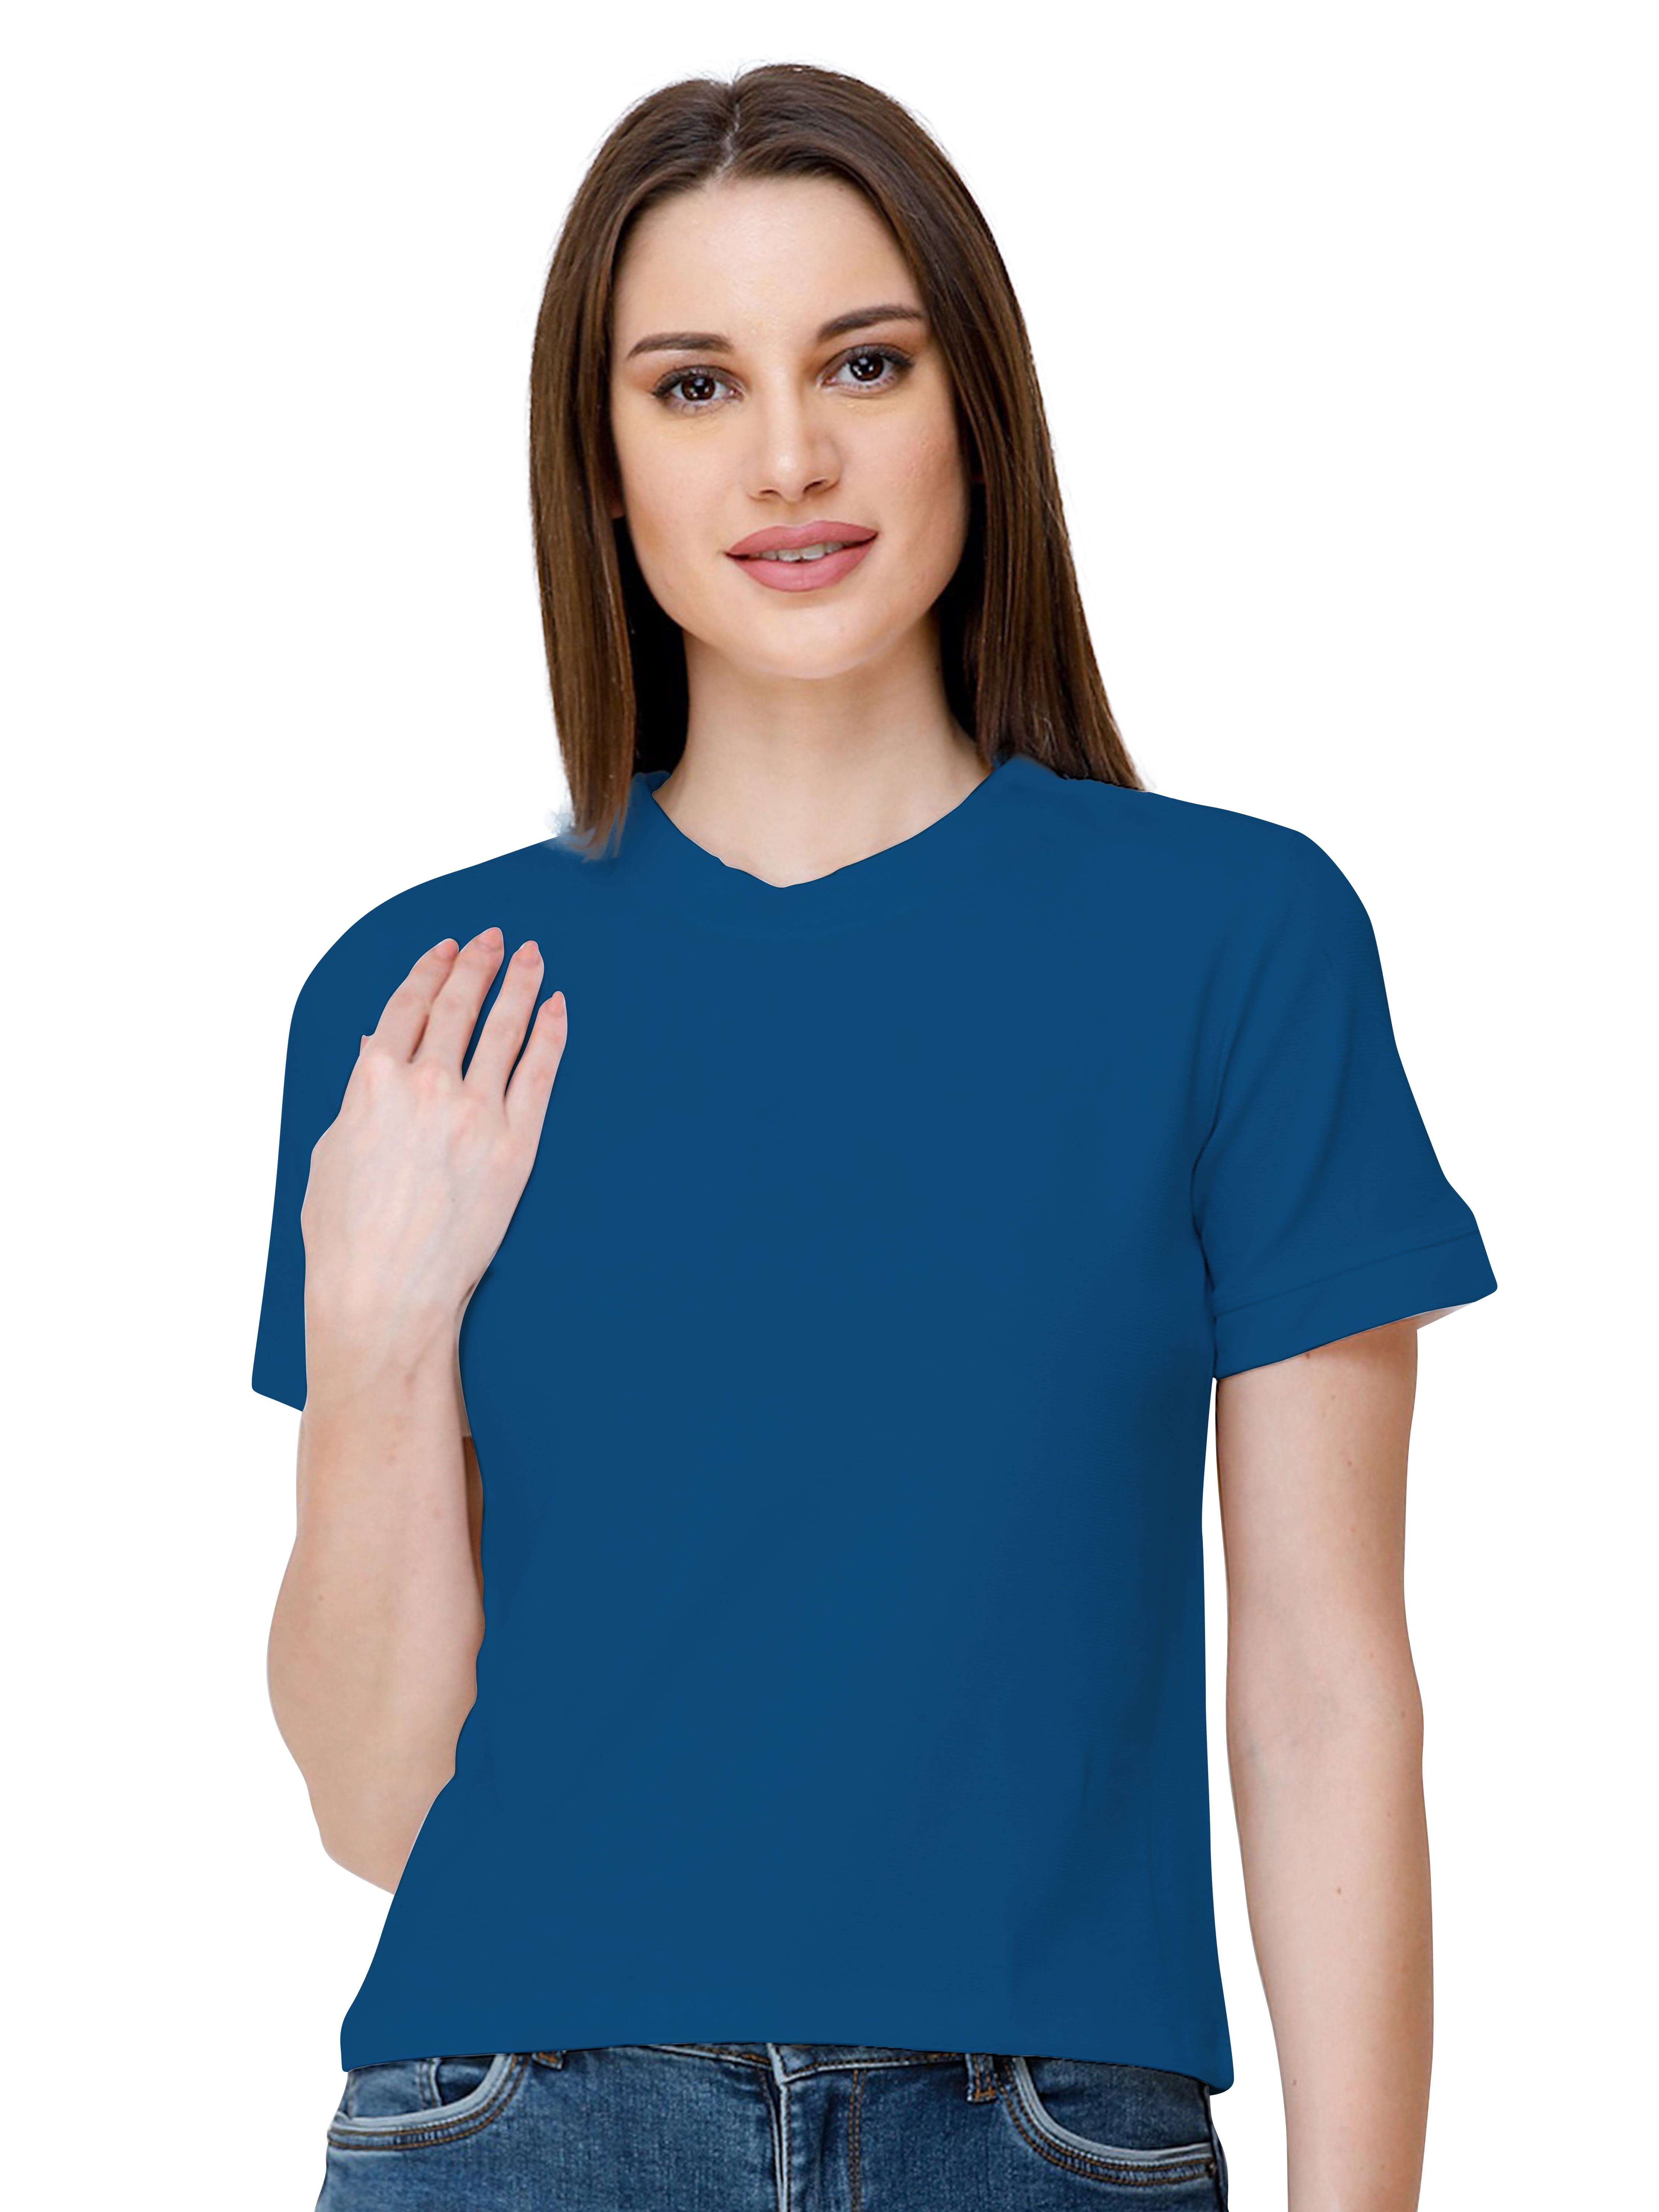 eloria Women's Lycra Round Slim Fitted Basic Tee Tops Short Sleeve T- Shirt, Color : Teal blue - Walmart.com